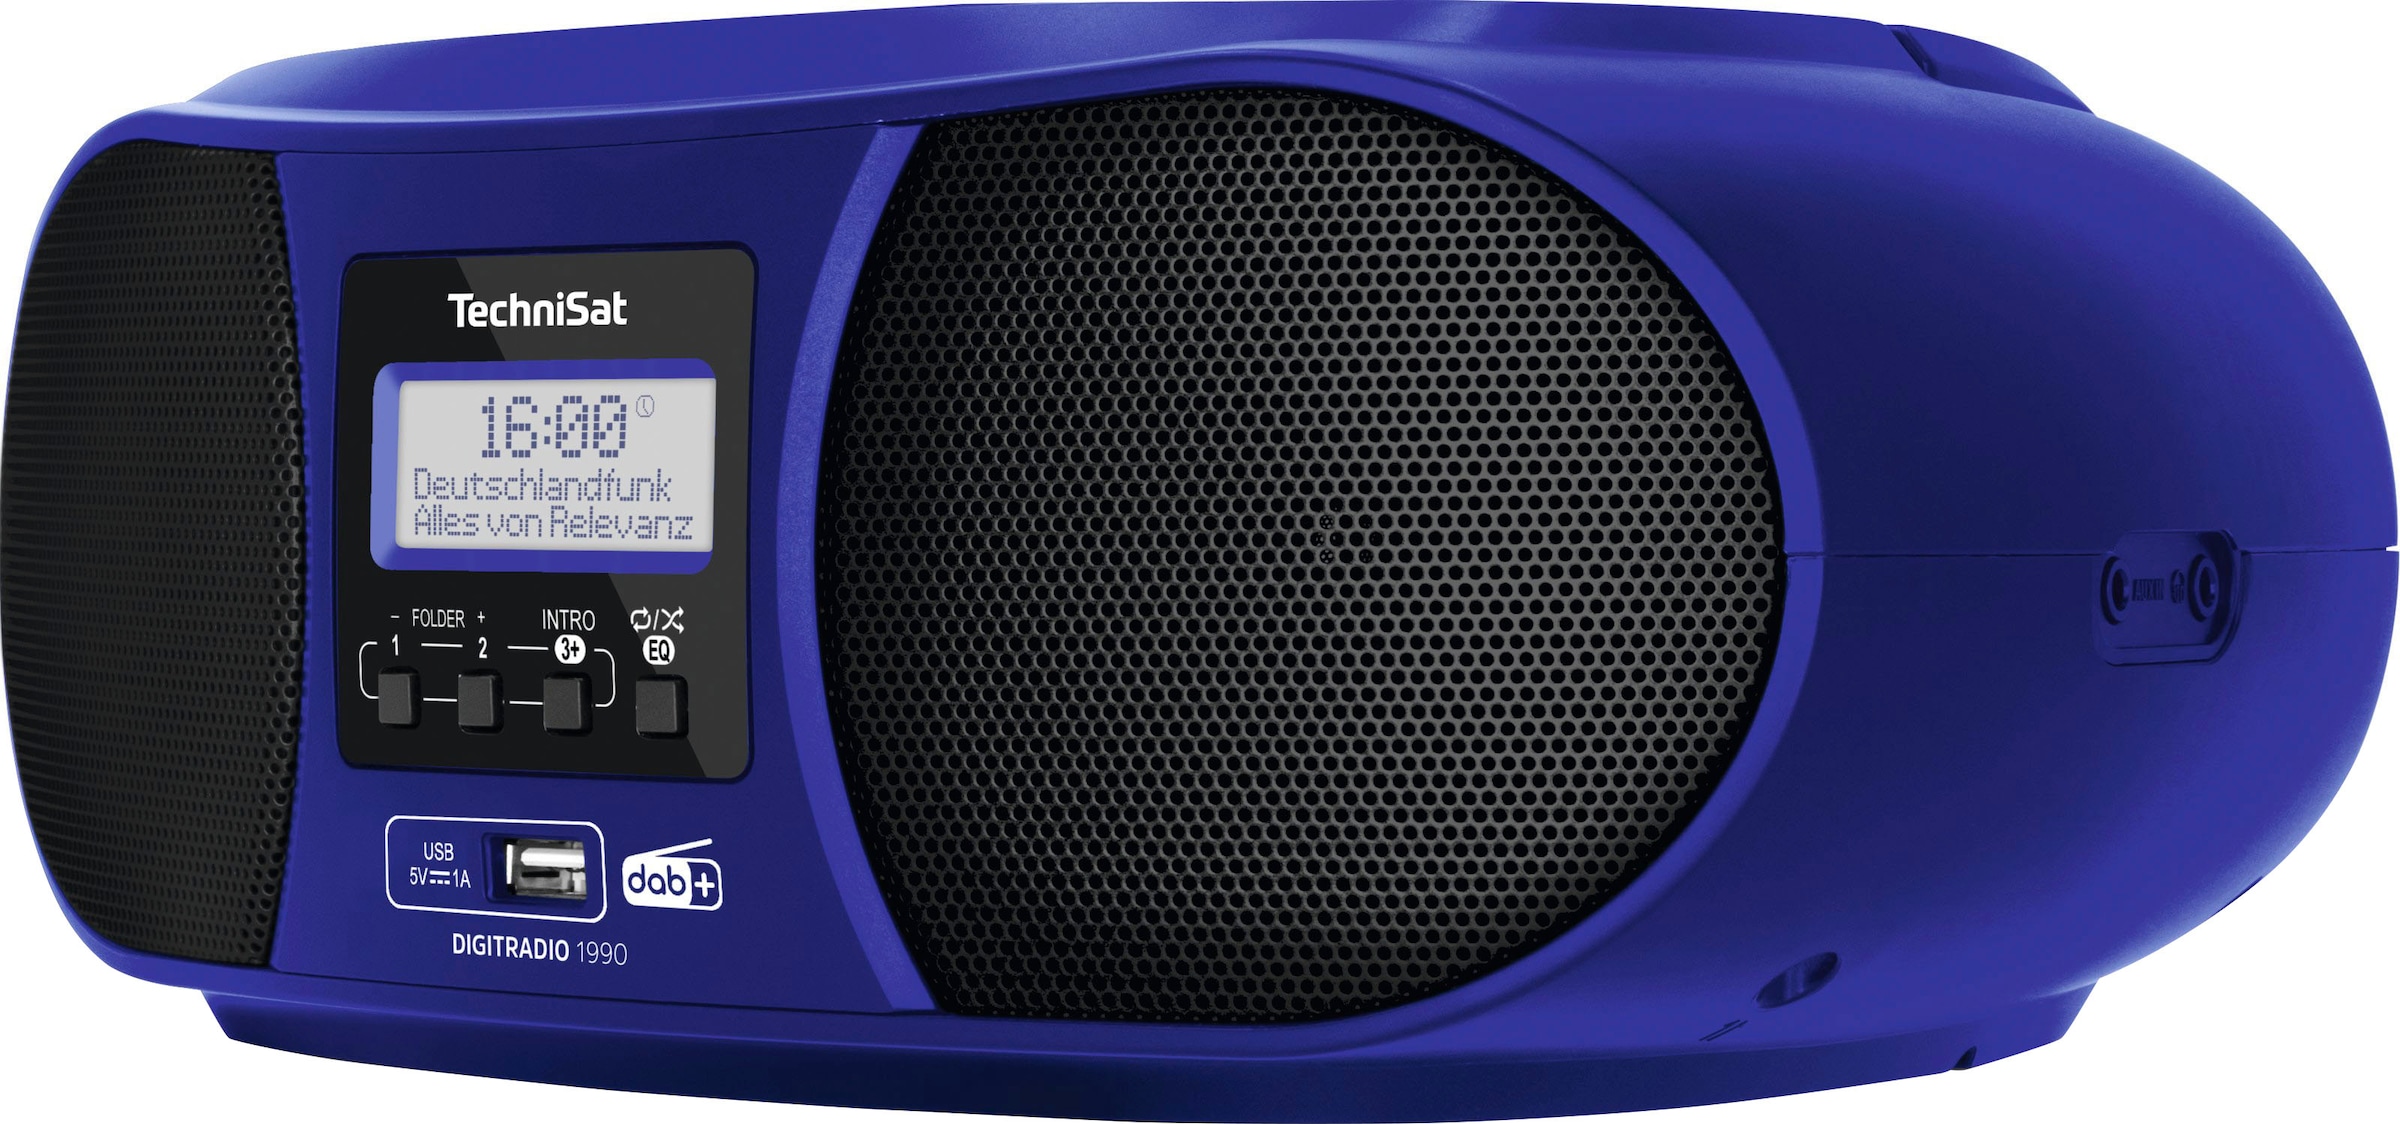 TechniSat Digitalradio (DAB+) RDS 1990«, ( OTTO W), »DIGITRADIO bei jetzt mit (Bluetooth DAB+)-UKW CD-Player 3 Digitalradio